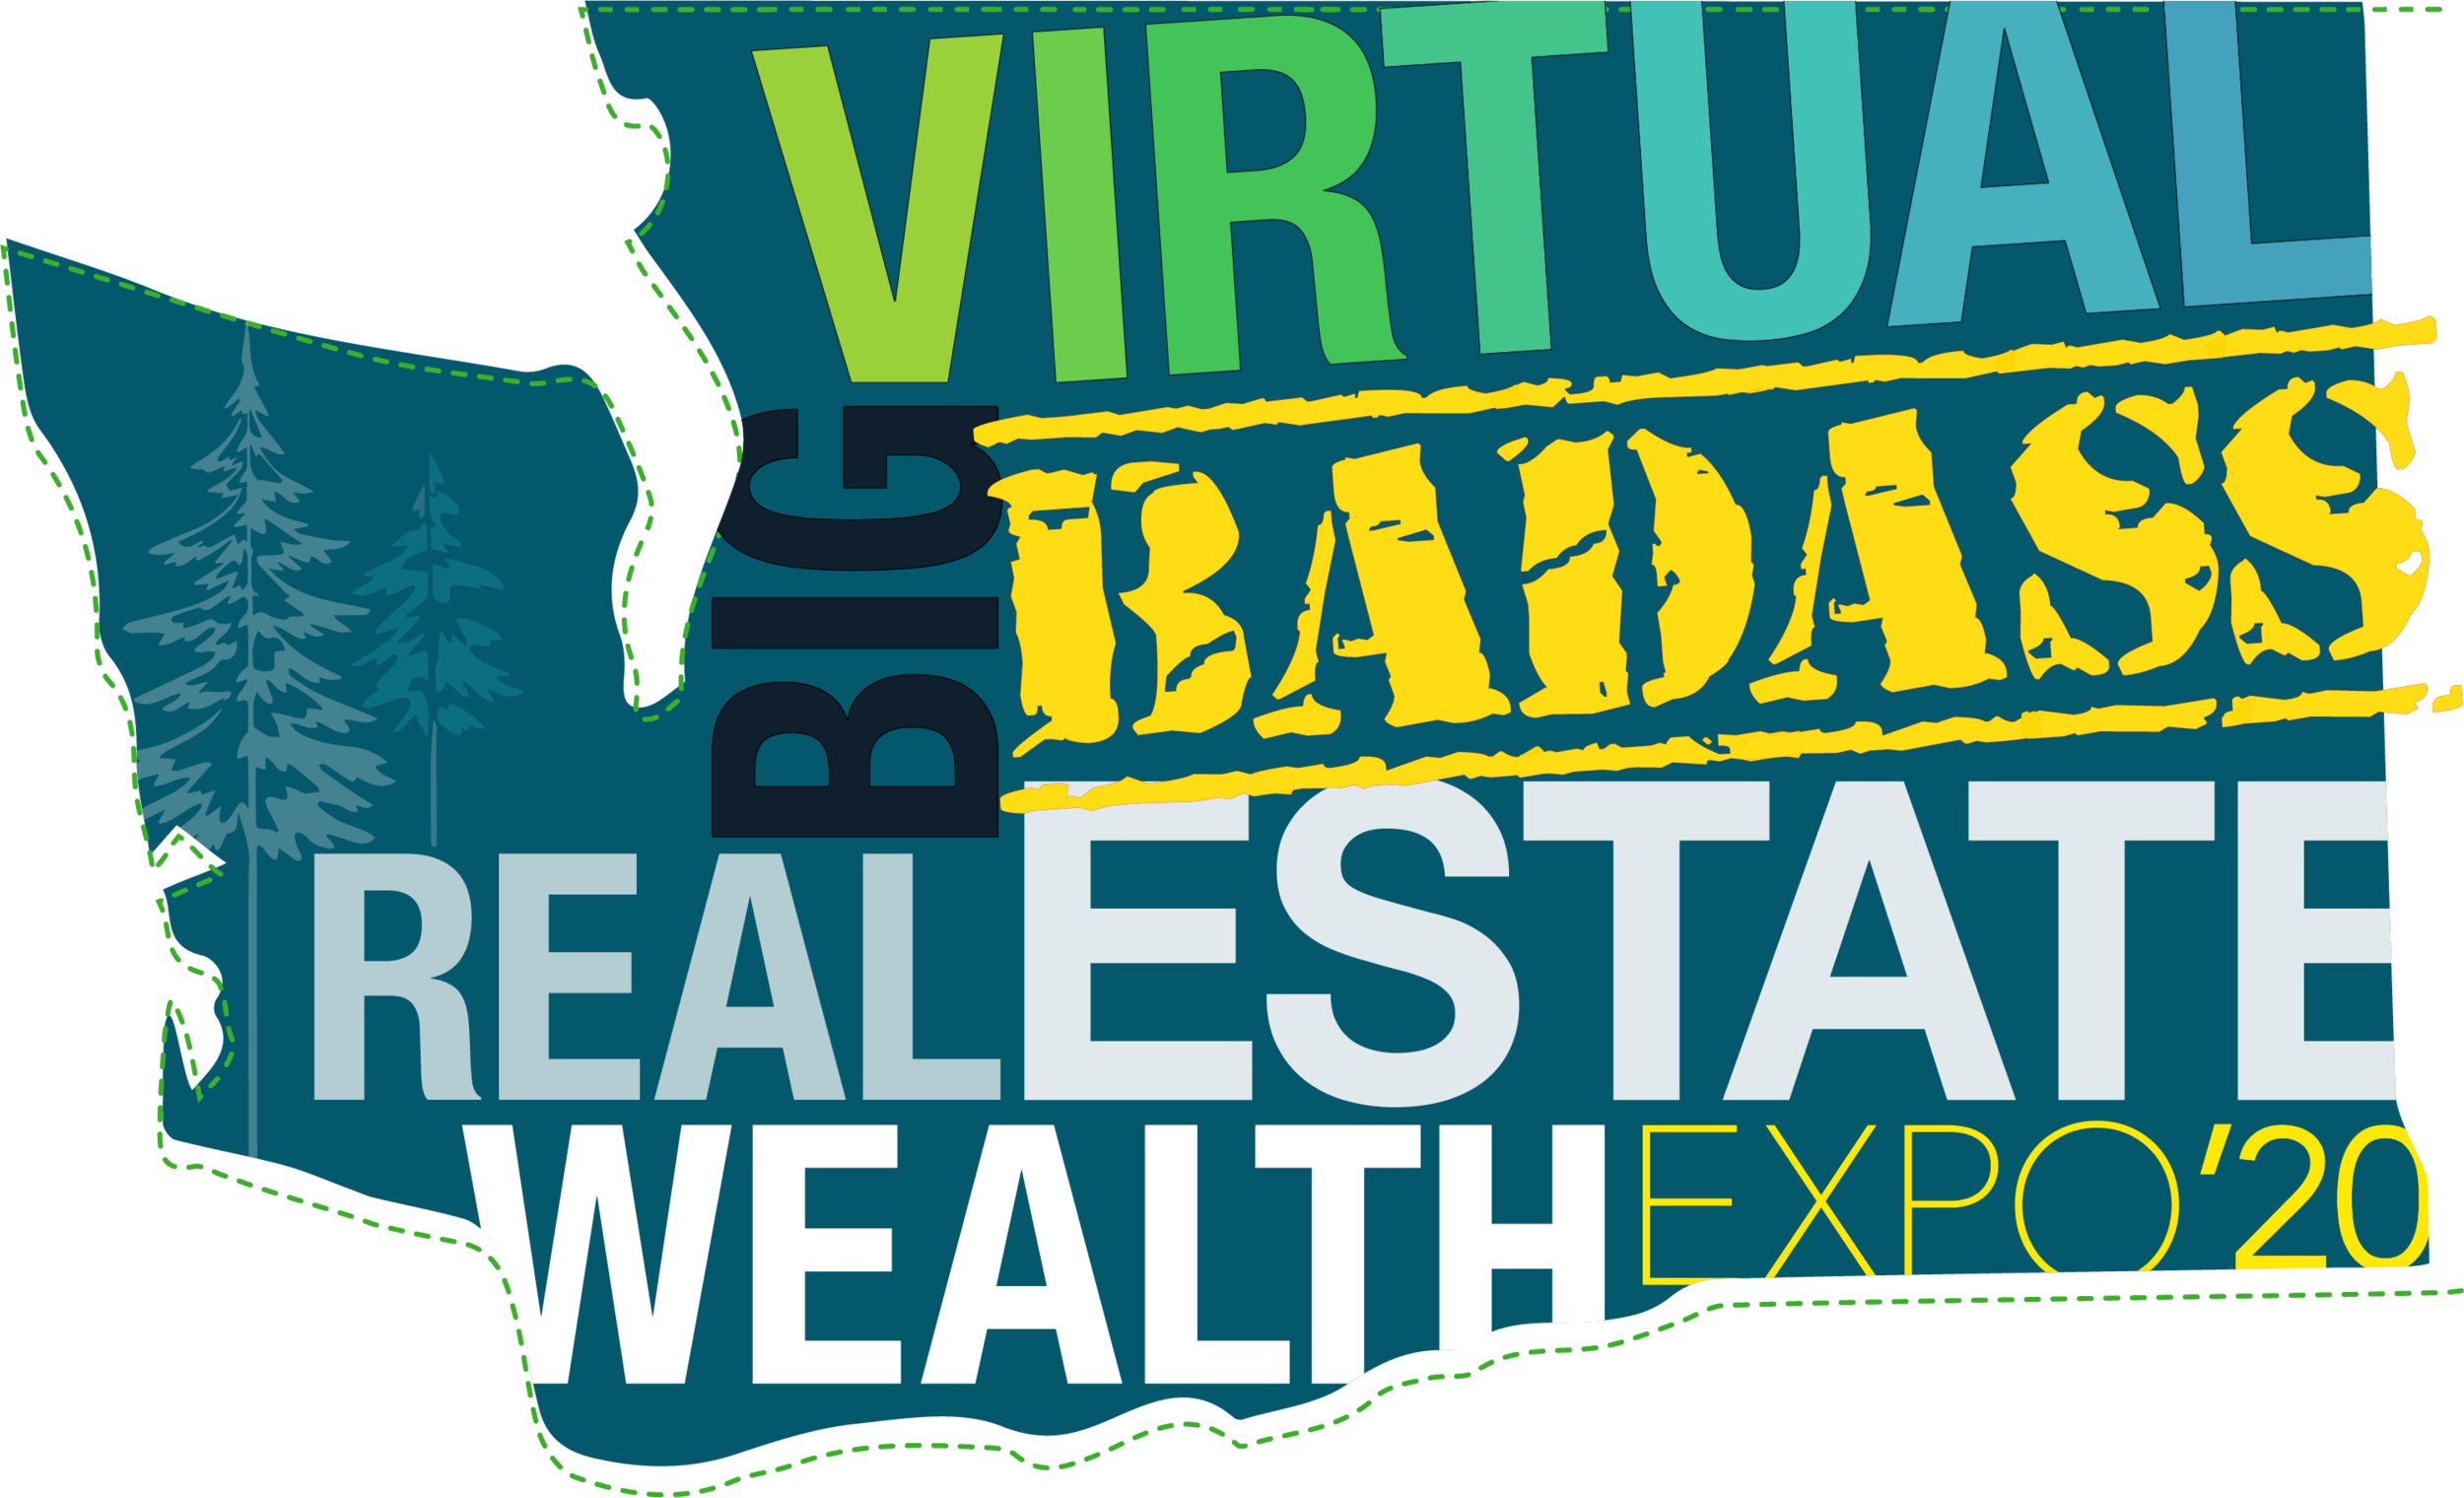 Virtual Big Badass Real Estate Wealth Expo 2020